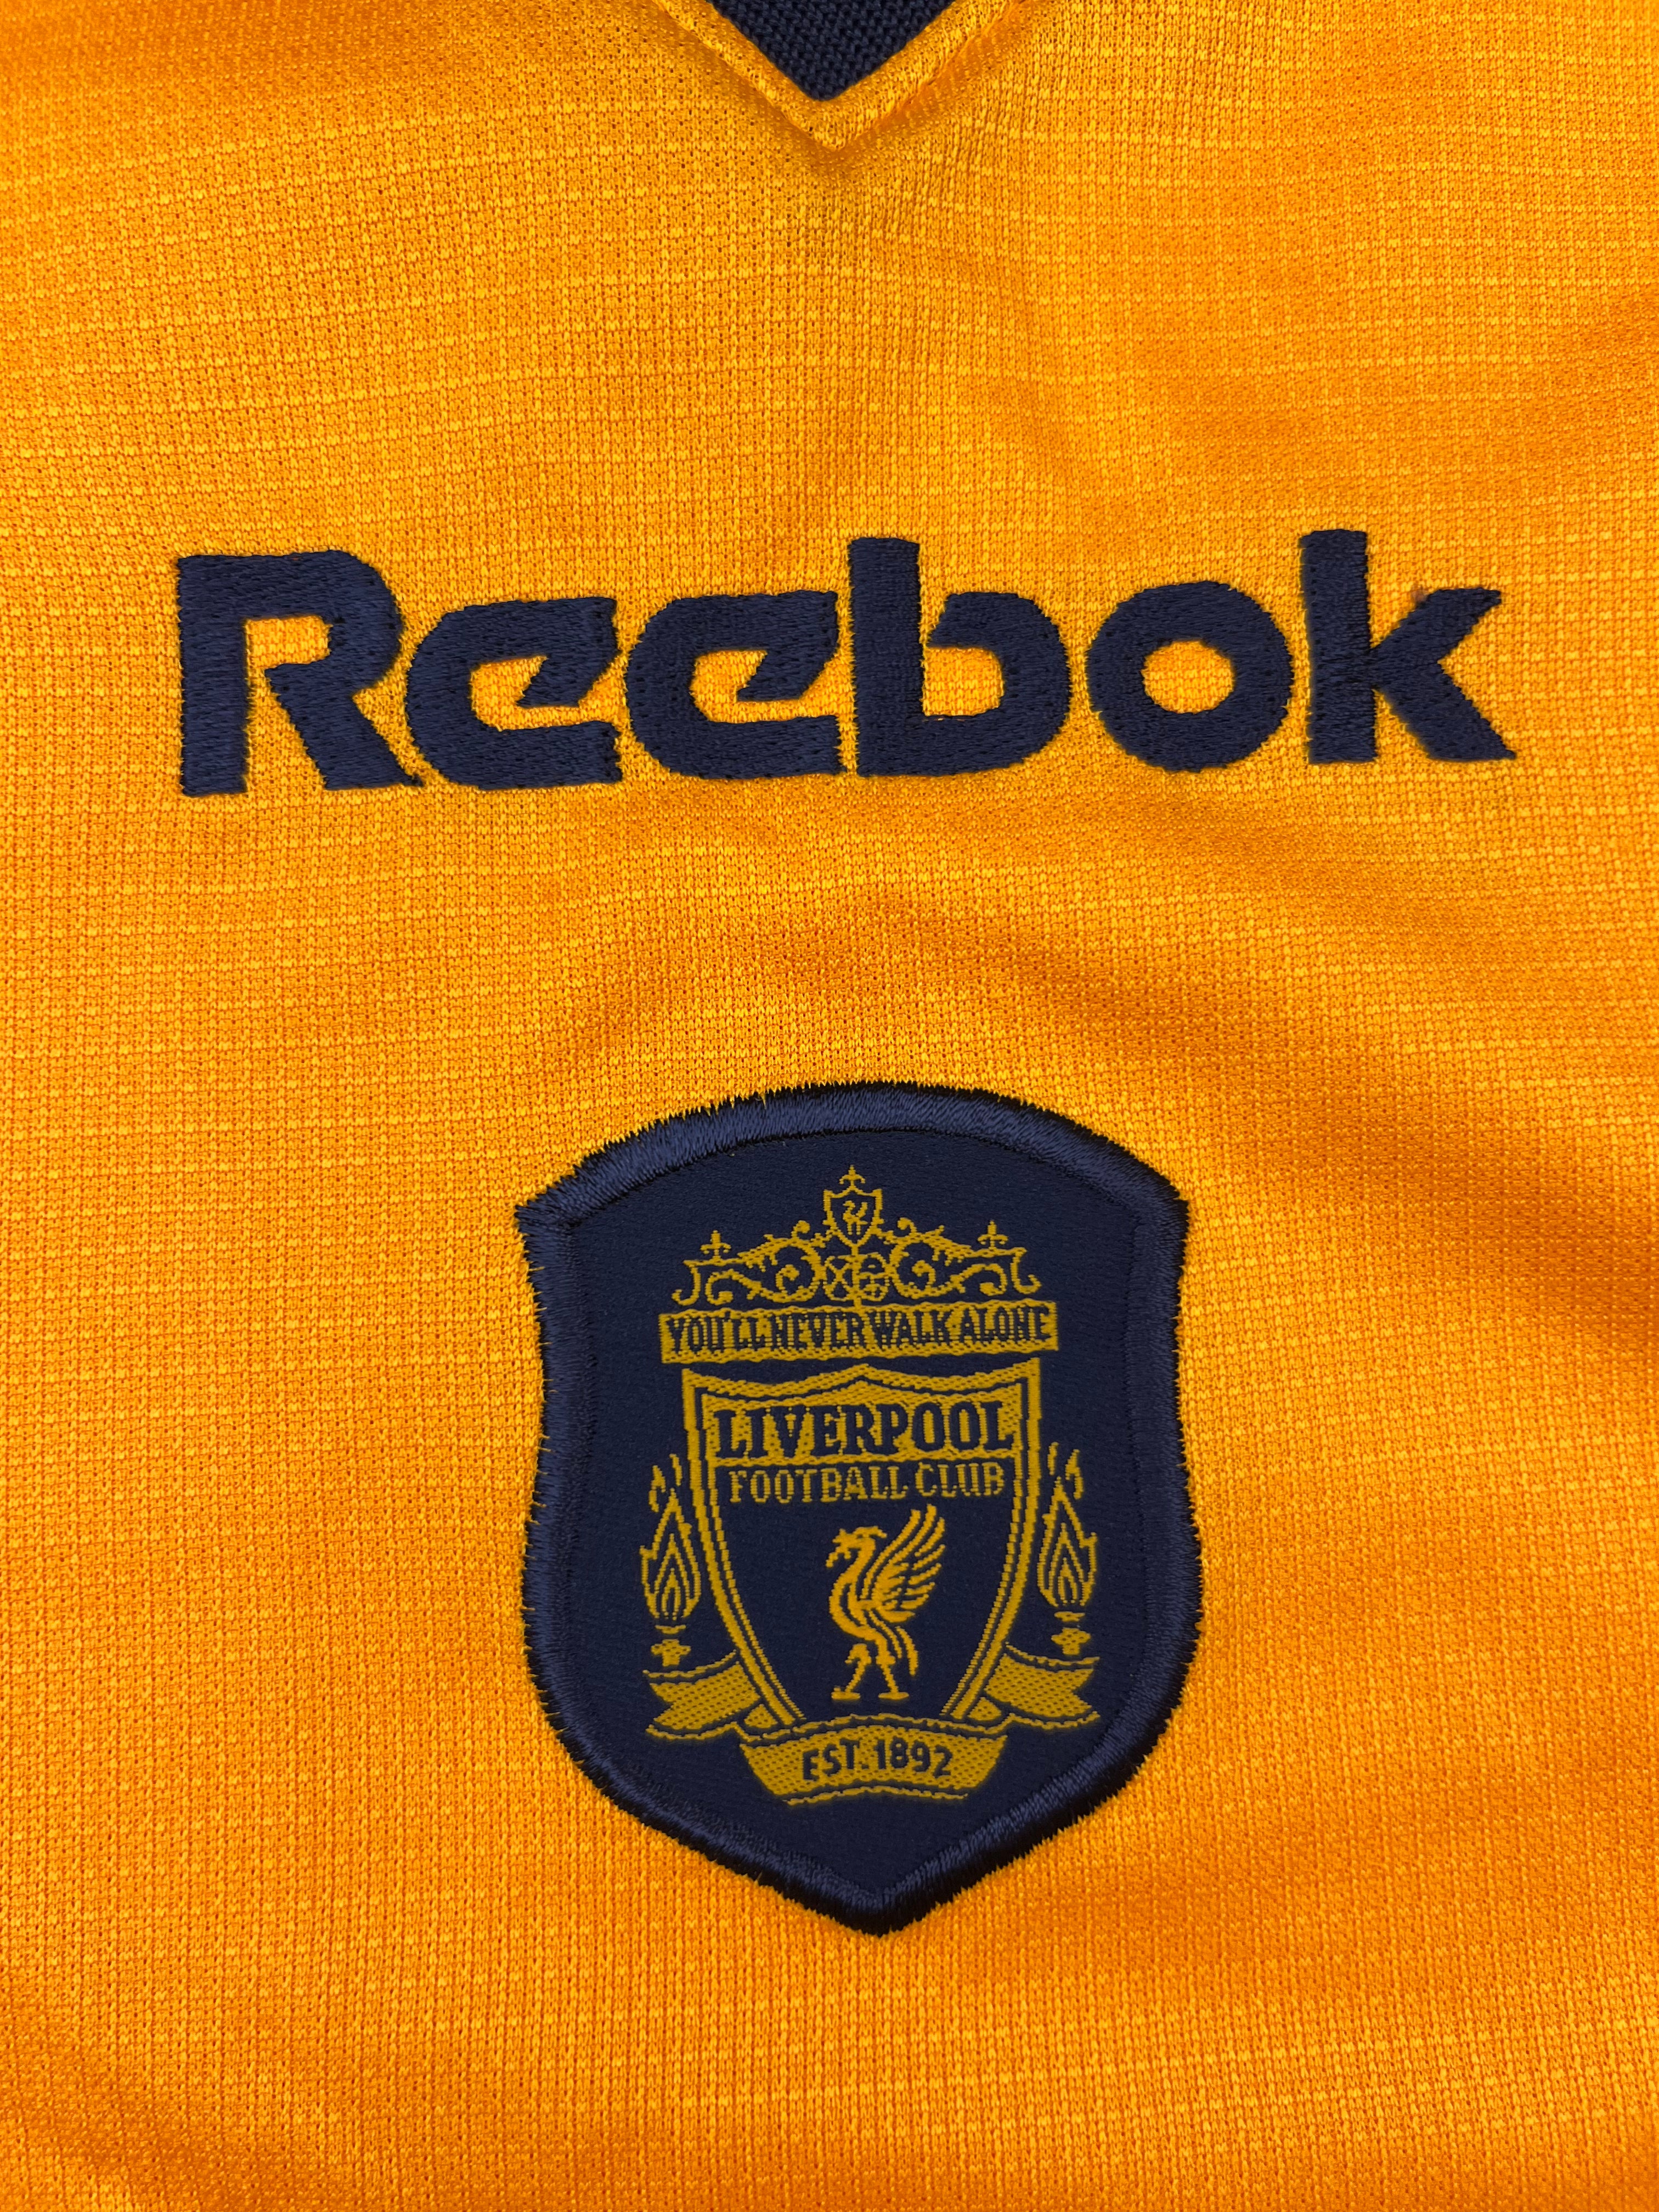 2000/02 Liverpool Away Shirt (M) 9/10